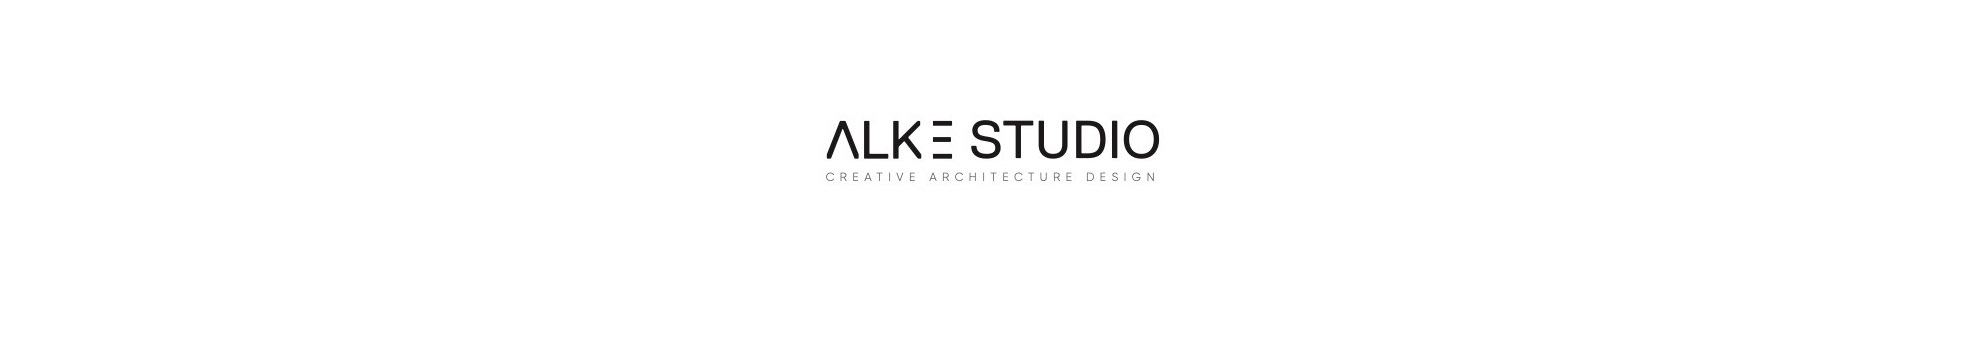 ALKE STUDIO's profile banner